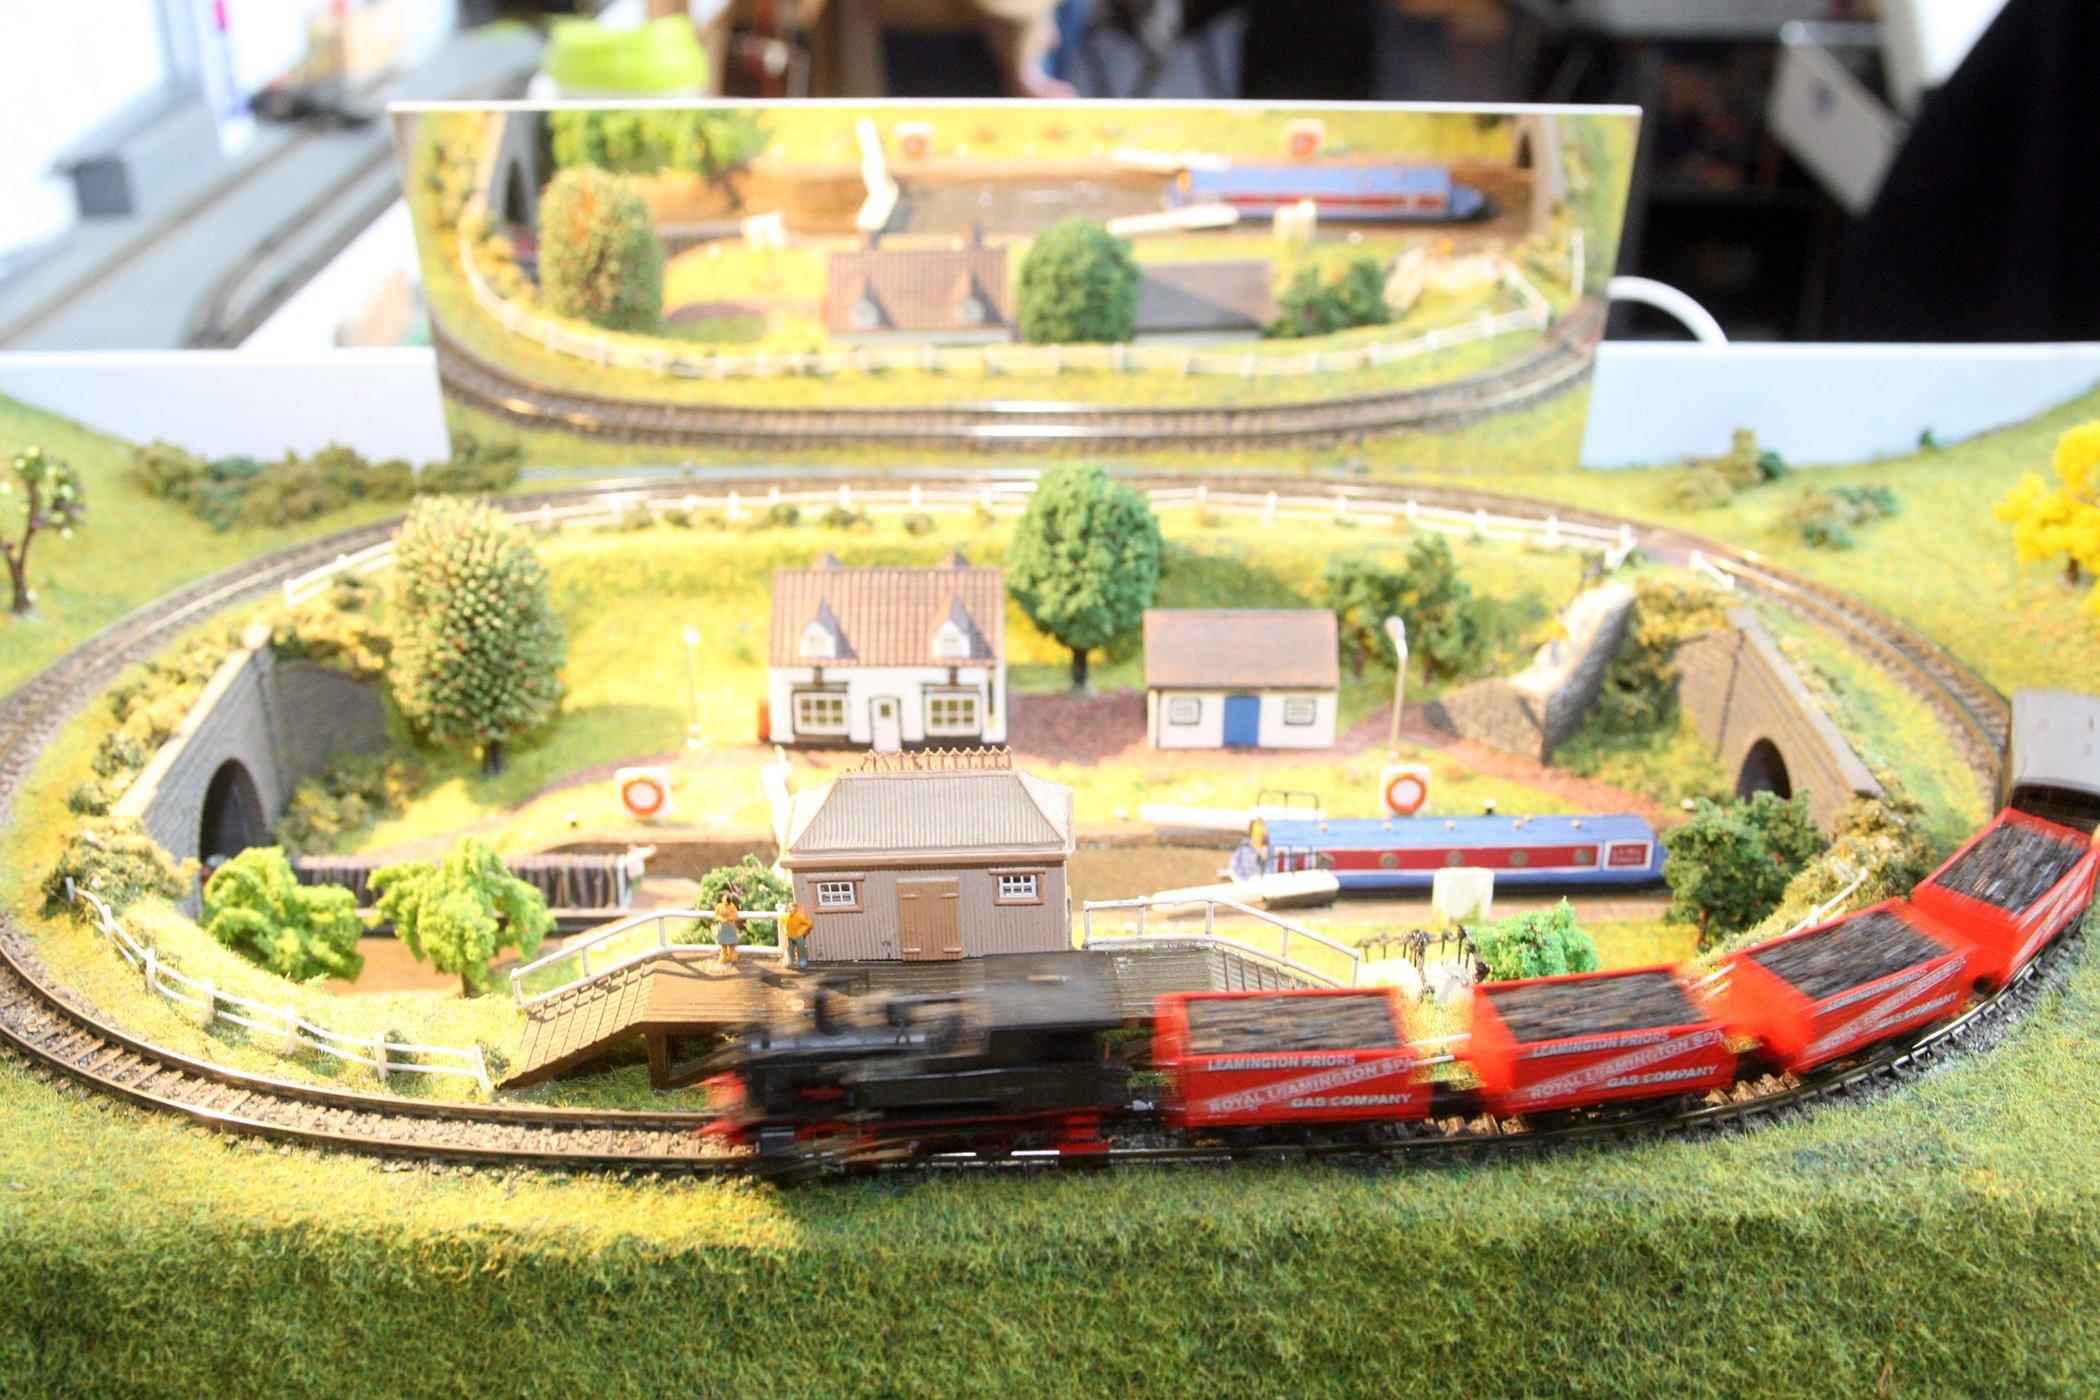 West Sussex N Gauge Model Railway Club builds its biggest layout yet. Photo by Derek Martin DM19110991a